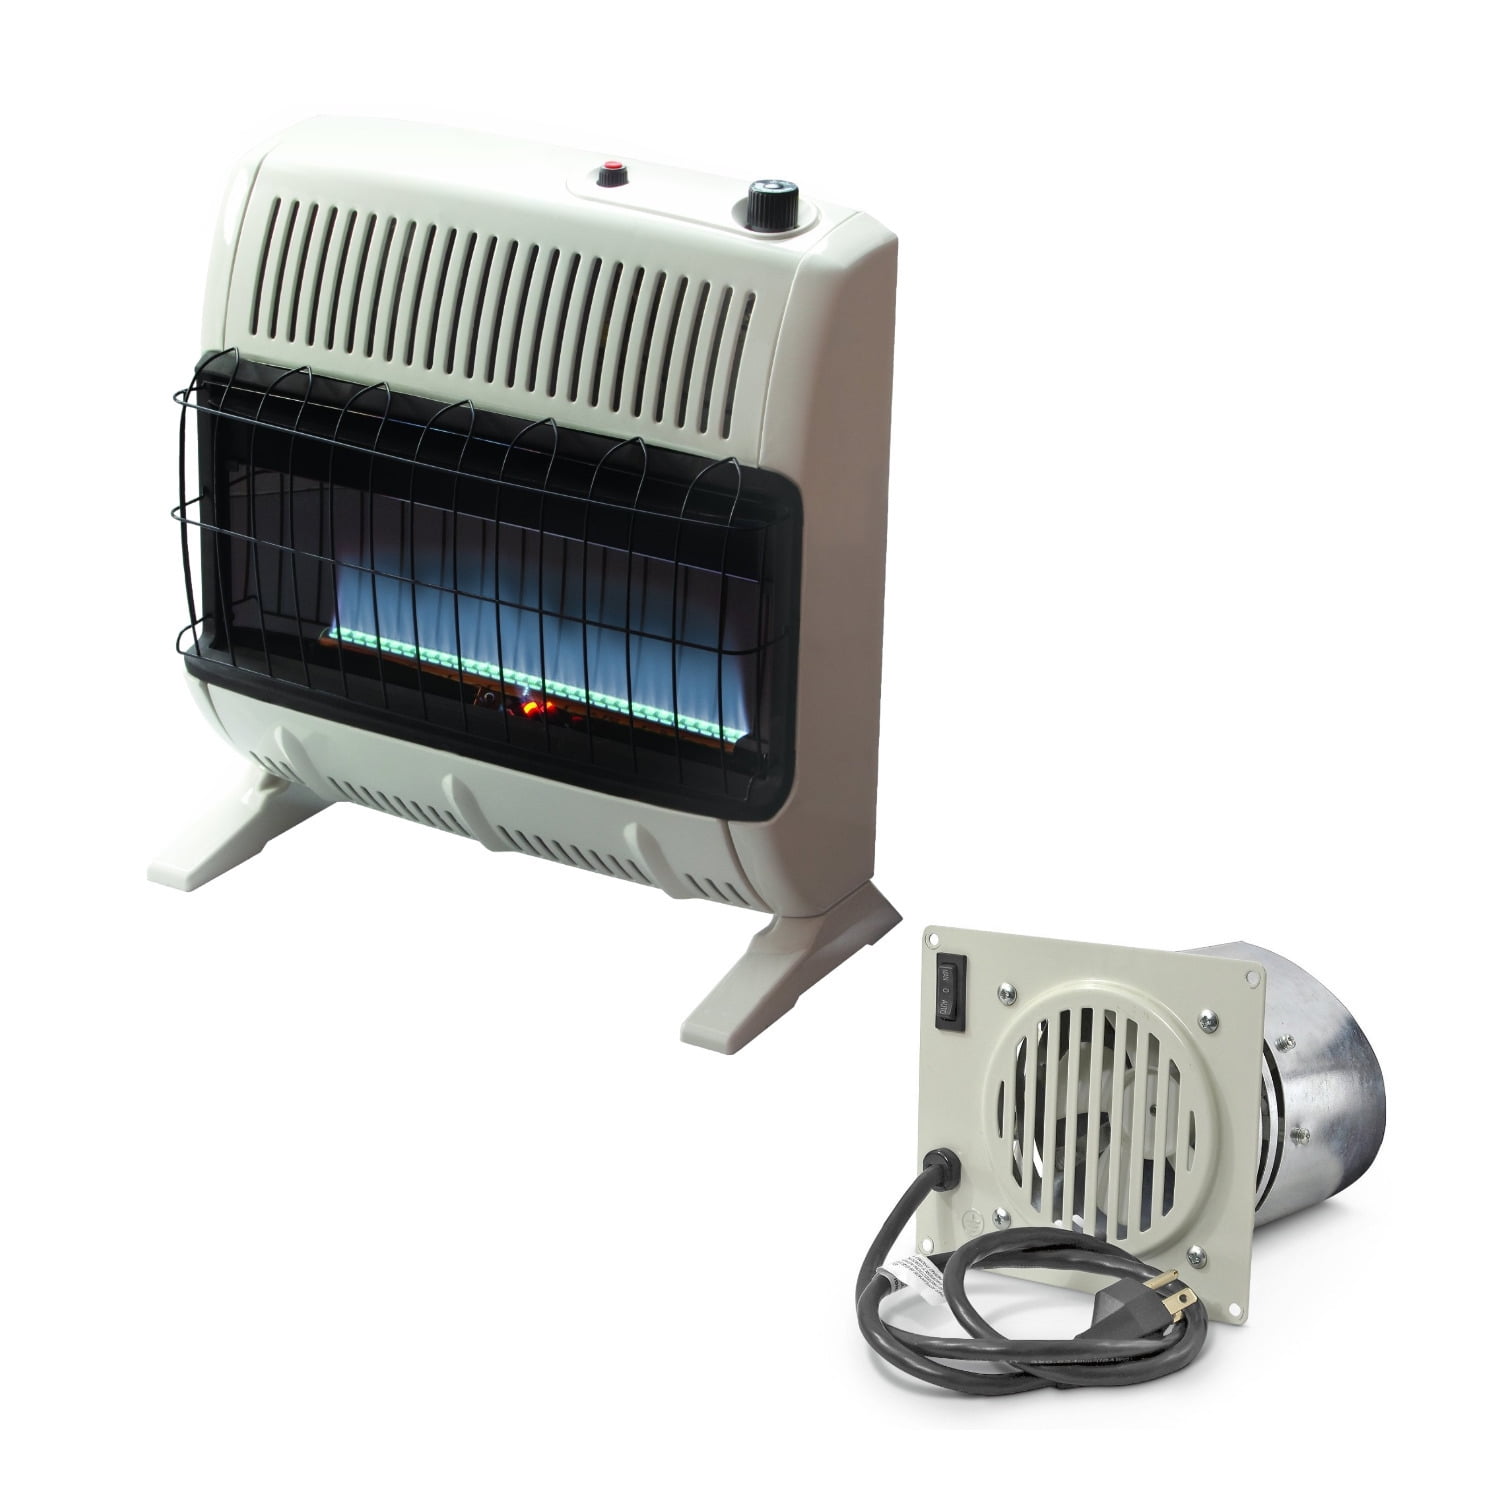 mr-free-radiant-propane-indoor-outdoor-heater-2-pack-b07jq3vz4h